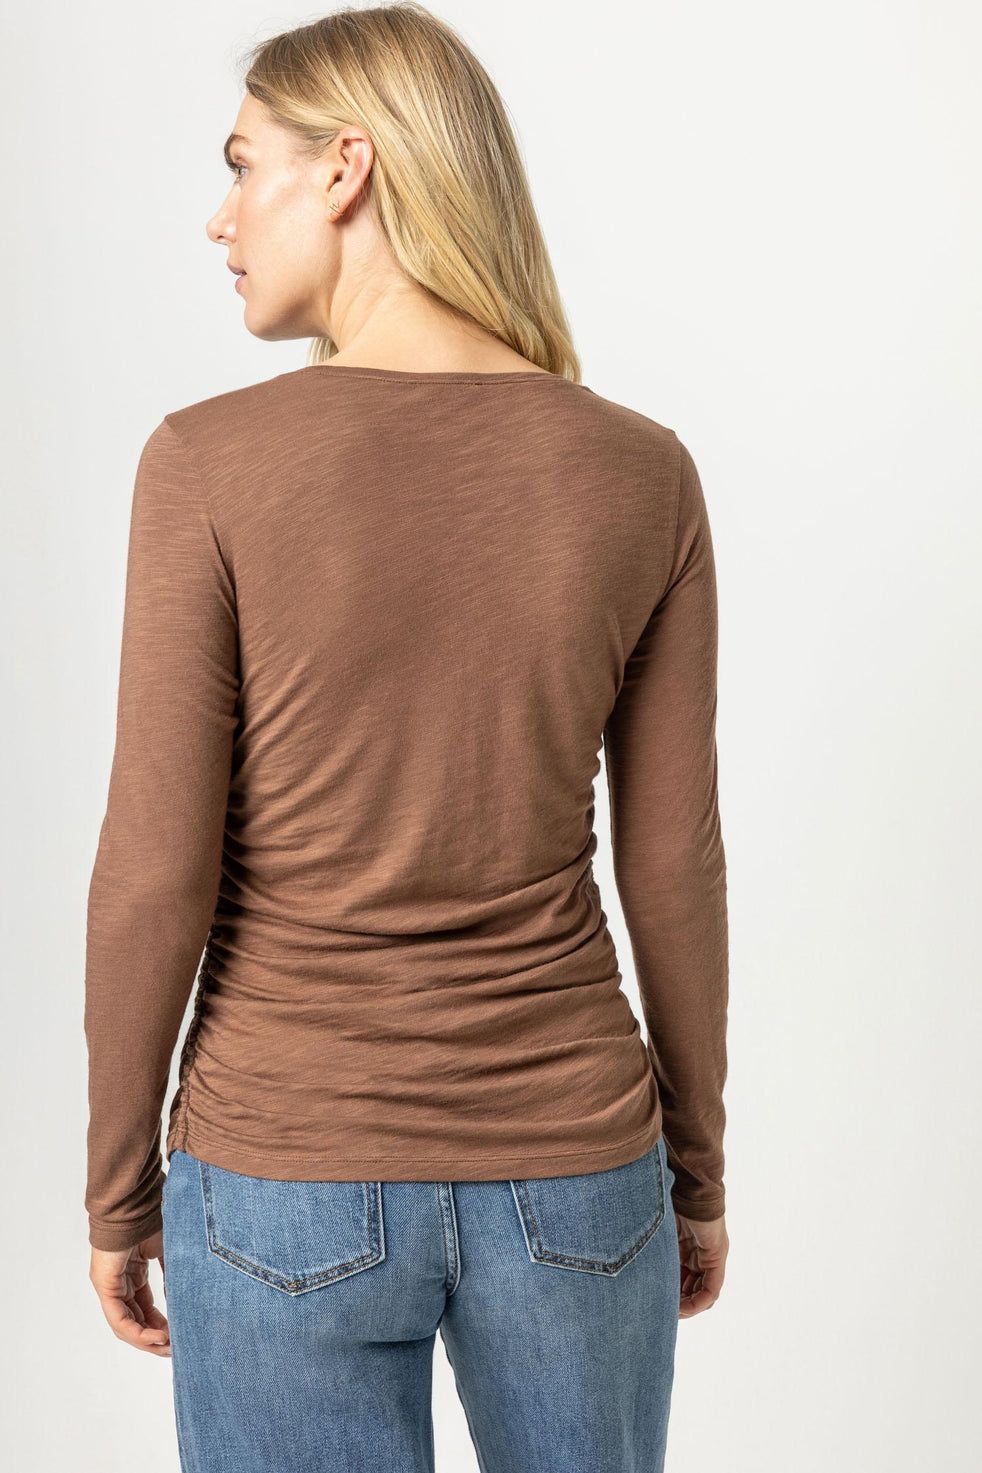 Women\'s Tops on Sale | Short & Long Sleeve Cotton Shirts for Women